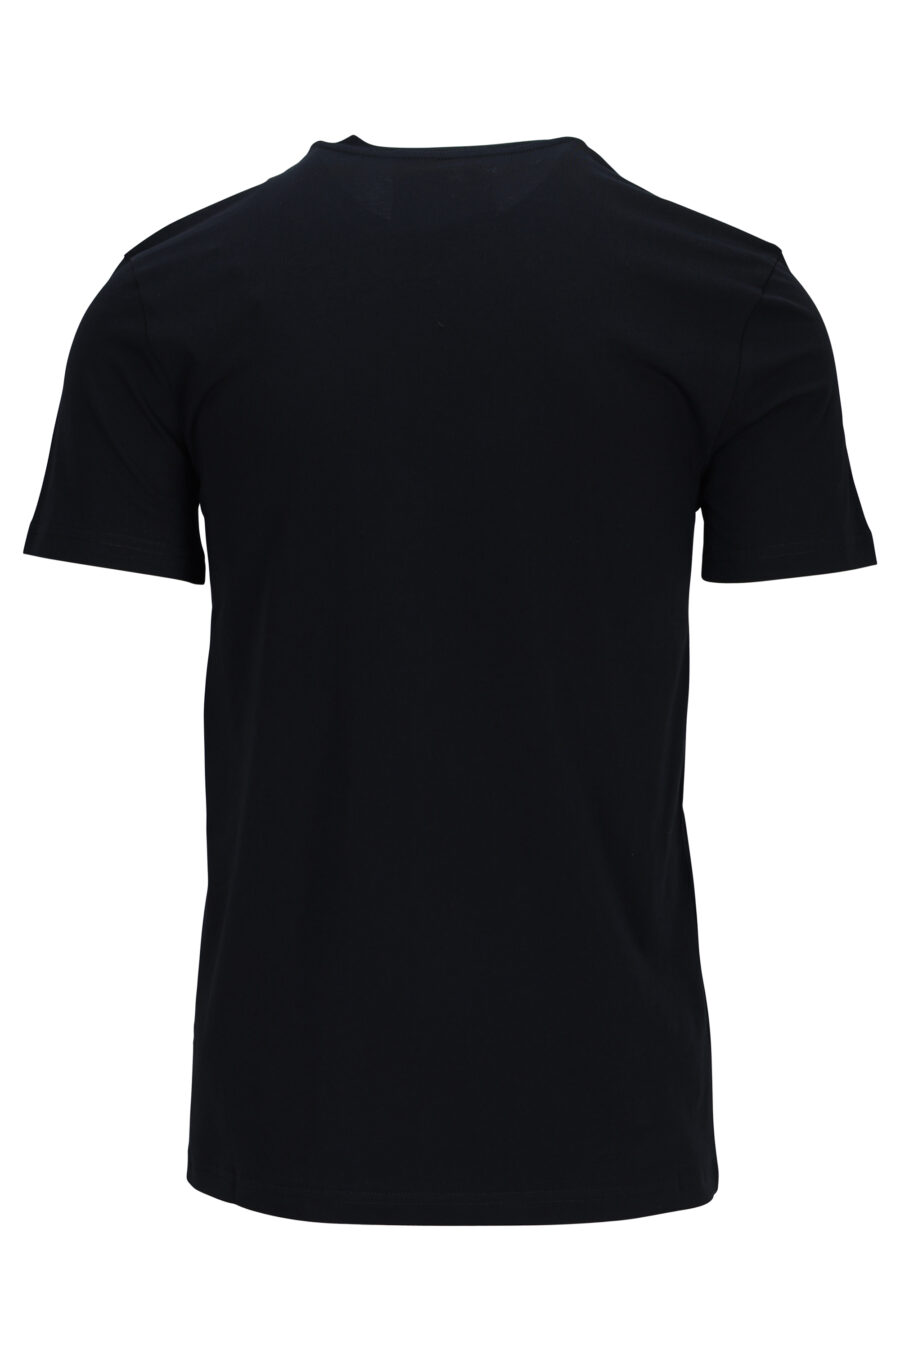 Camiseta negra con maxilogo "couture milano" - 889316936551 1